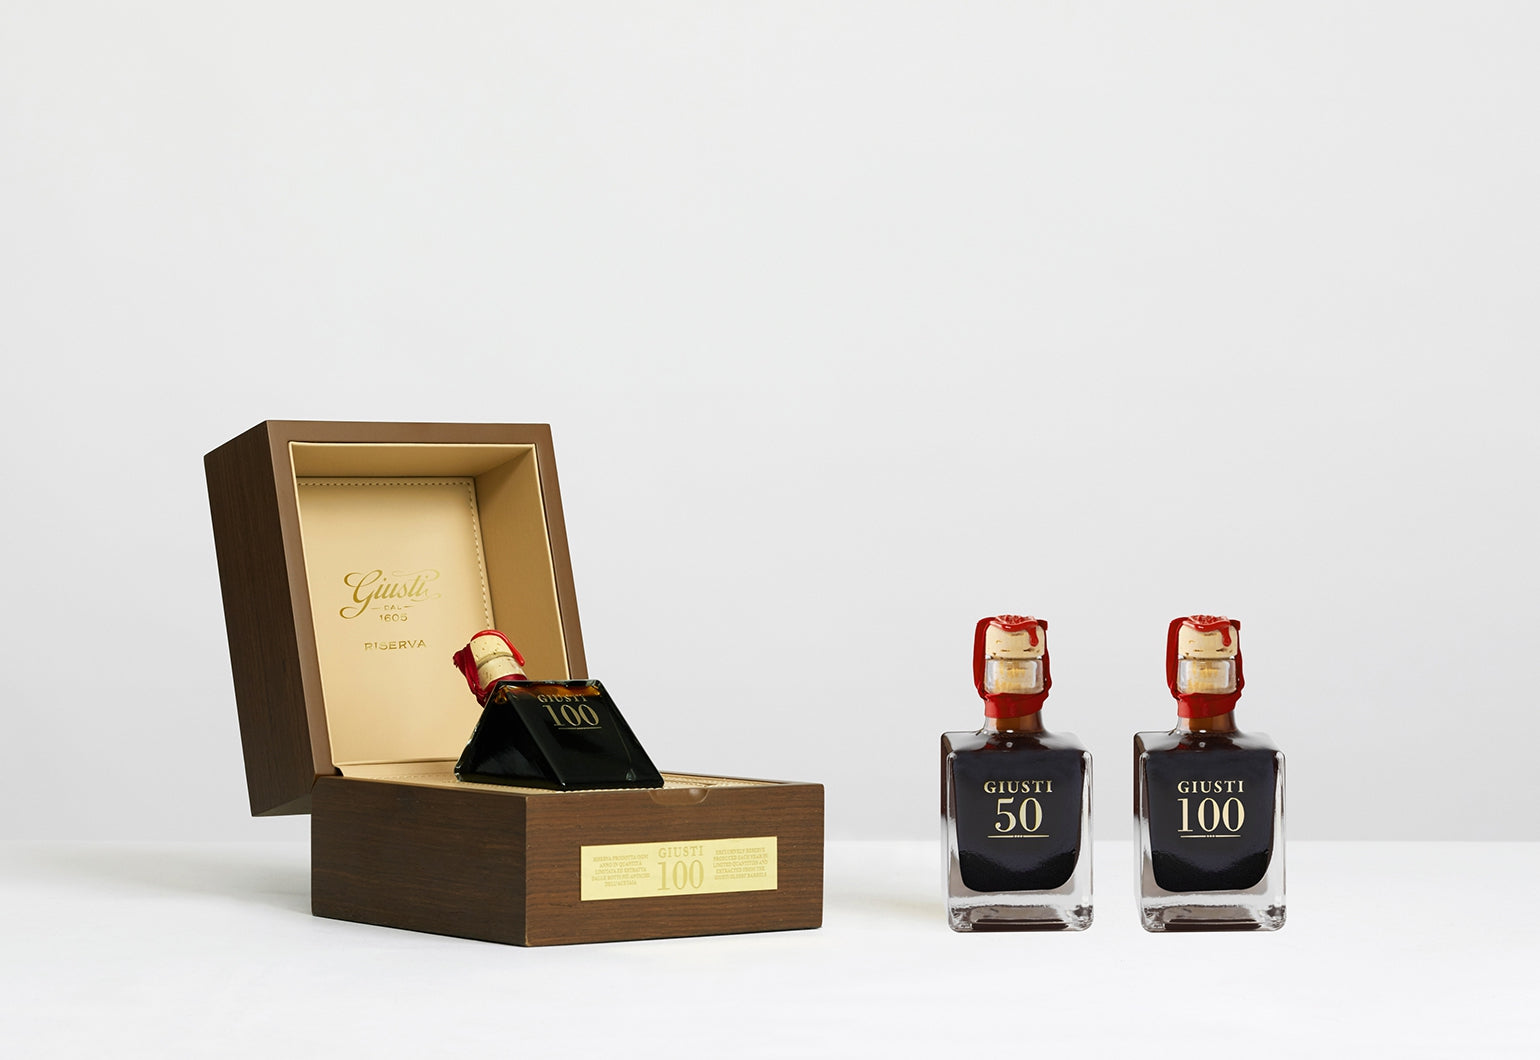 Giusti "100 Travasi" 100 Years Old Reserve Balsamic Vinegar